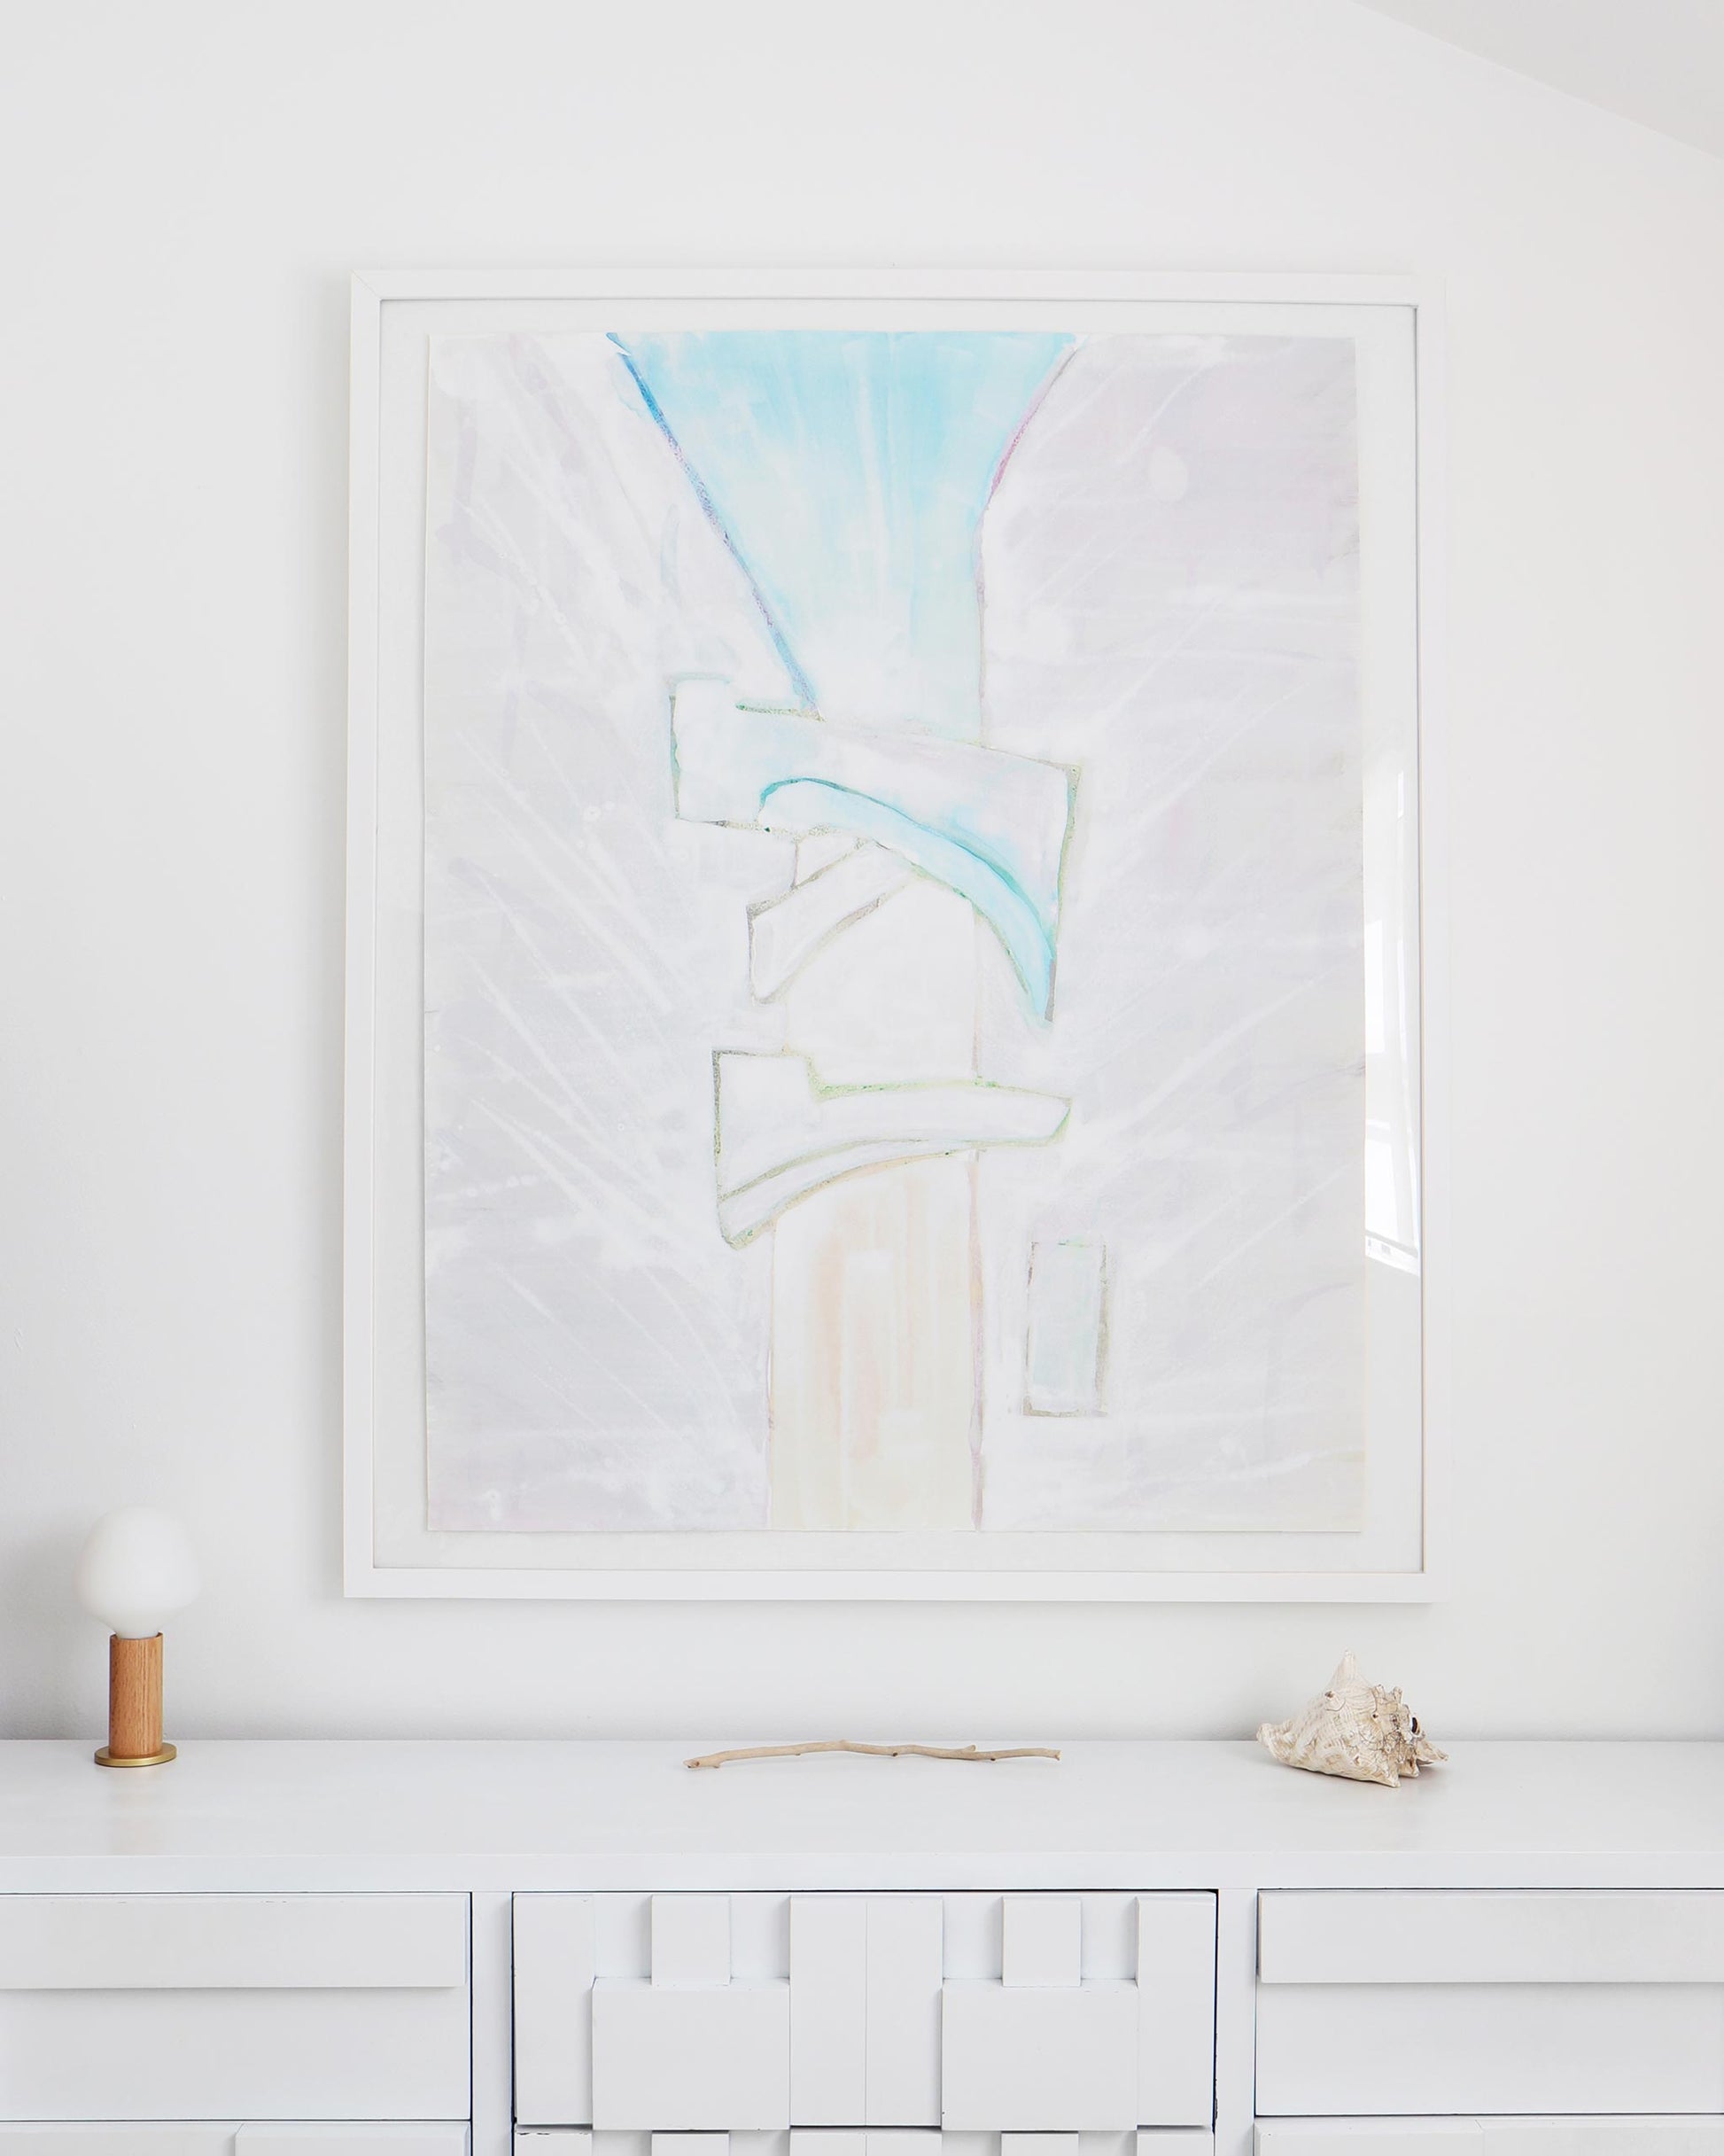 A white dresser with a Sky Arc Print 17" x 22" by Eskayel founder above it